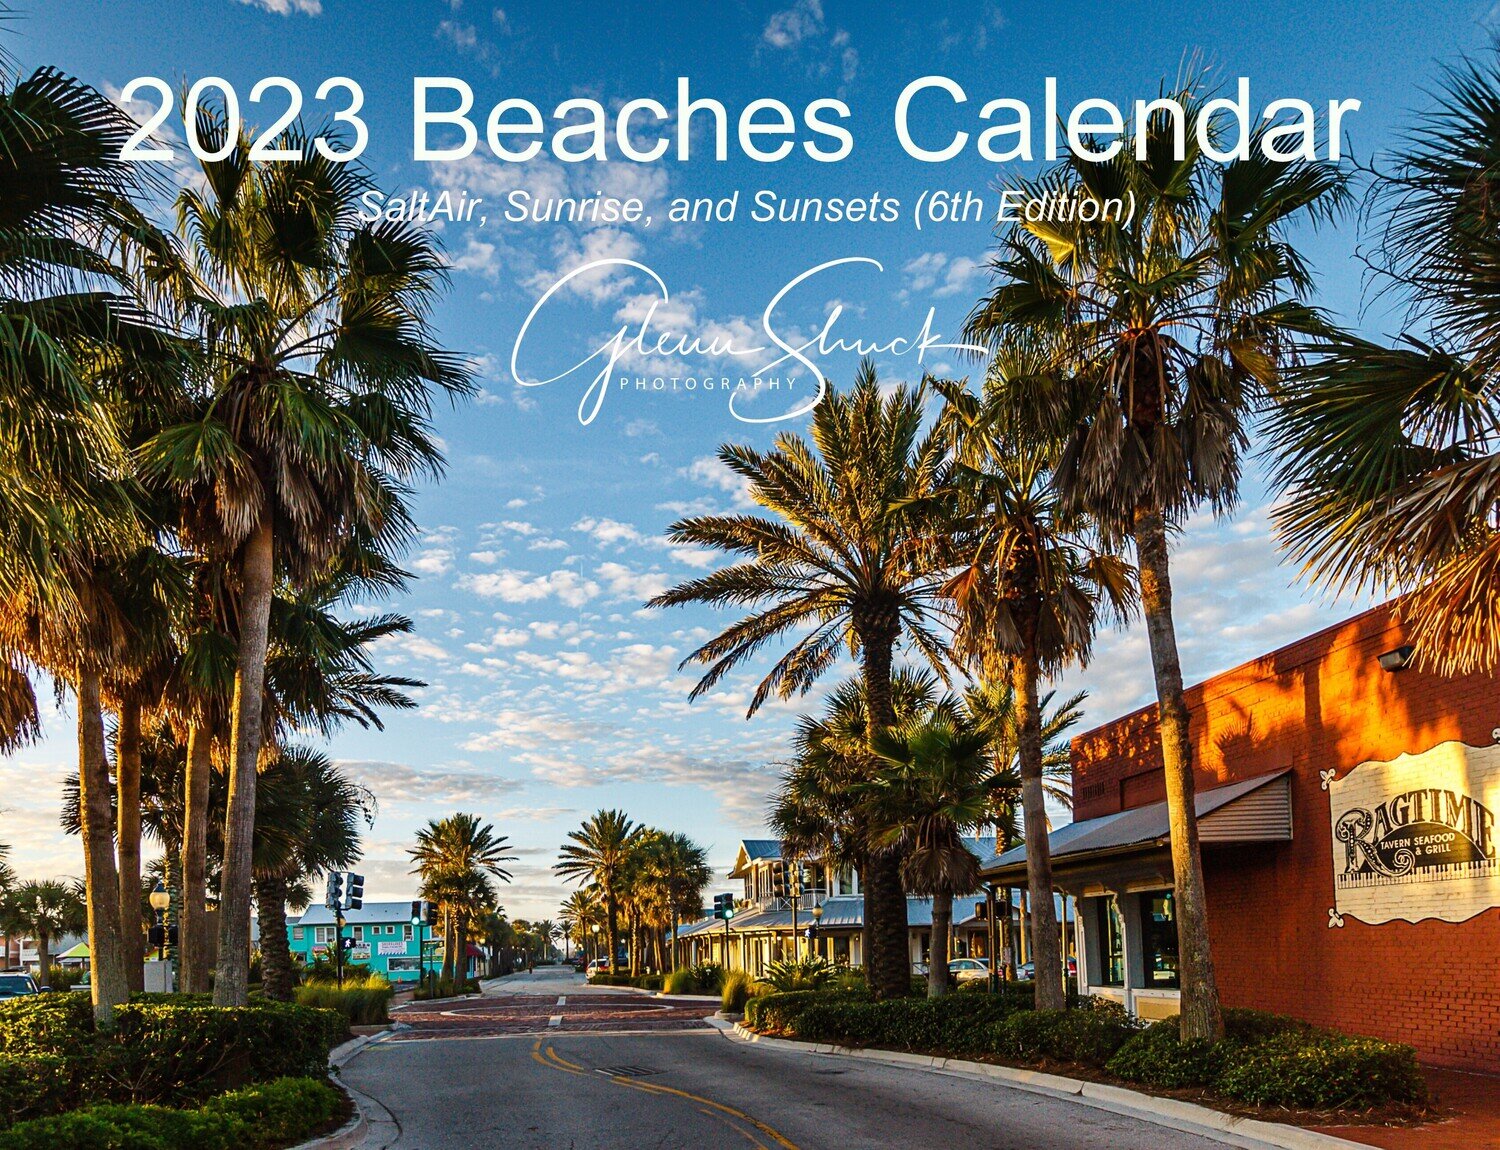 2023 Beaches Calendar